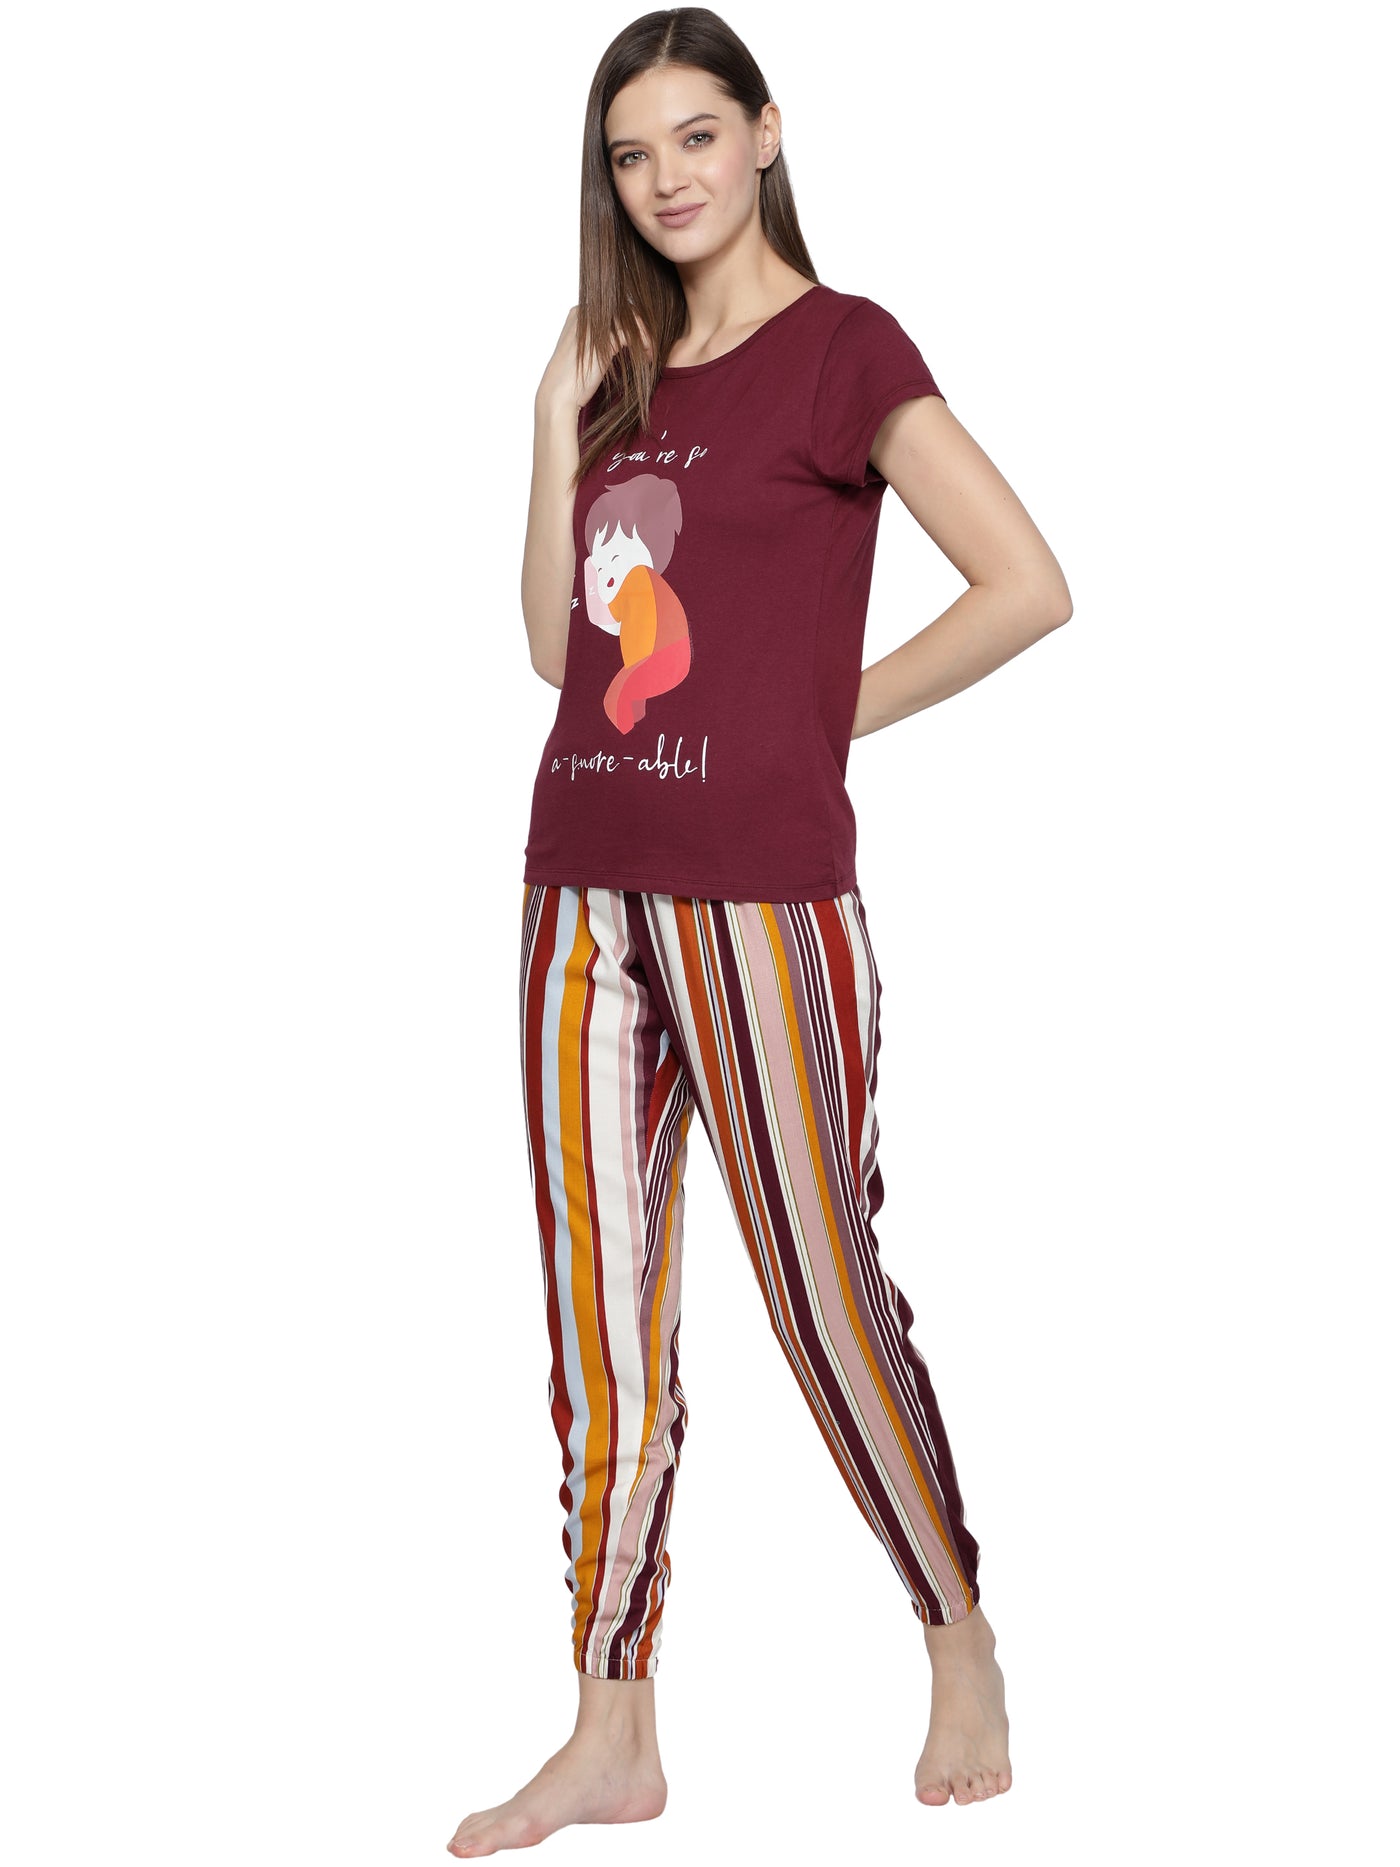 Pyjama Set for Women-Wine Stripes